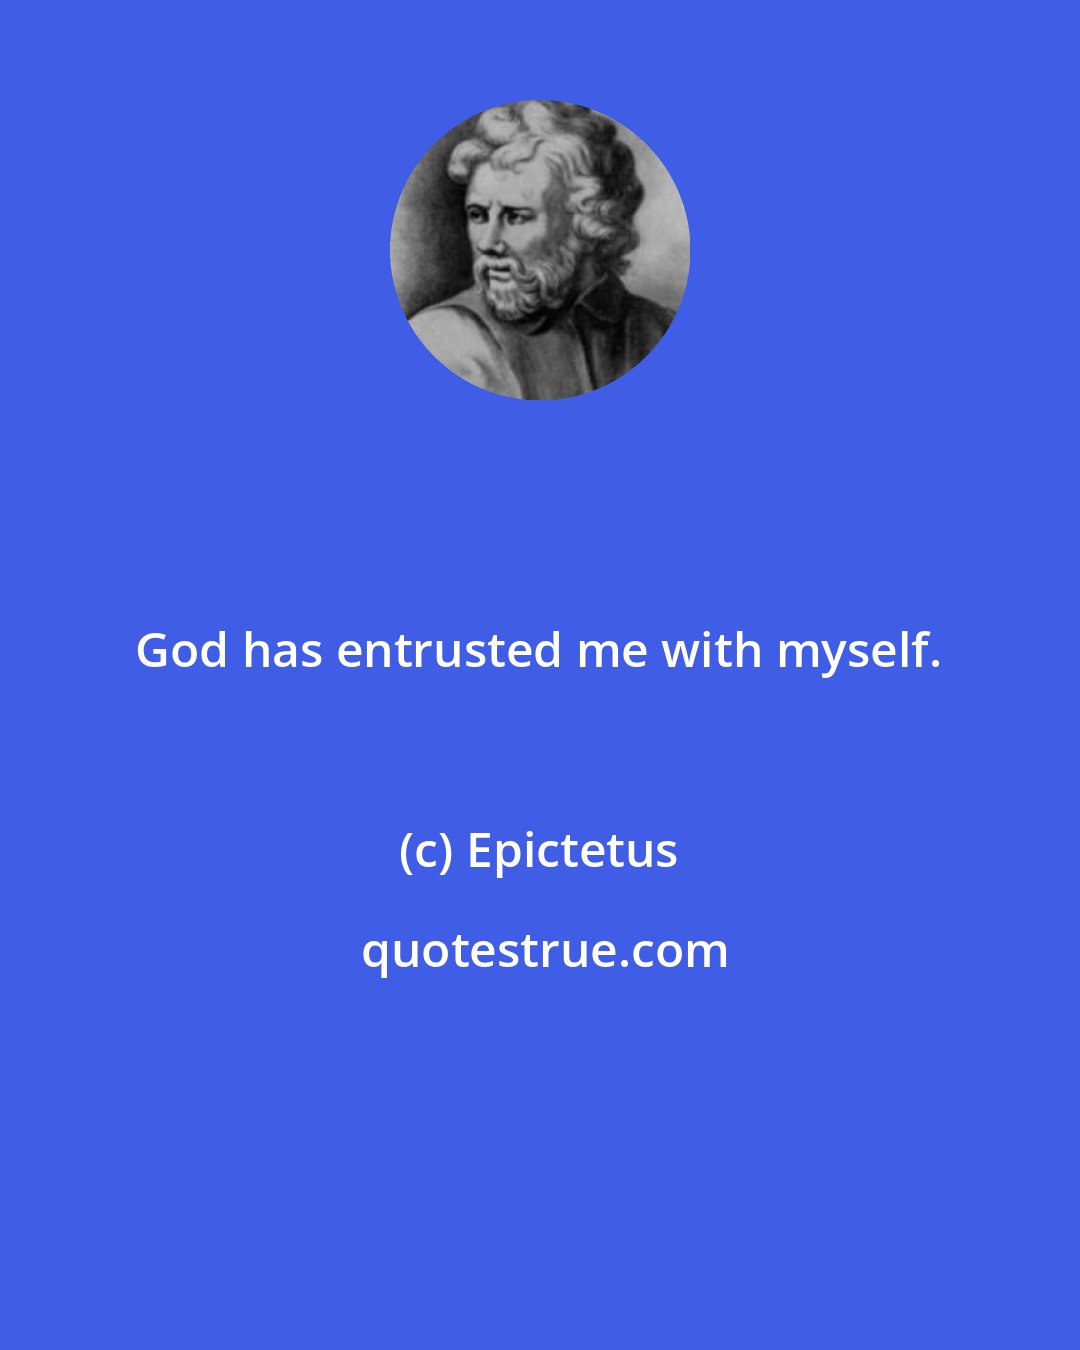 Epictetus: God has entrusted me with myself.